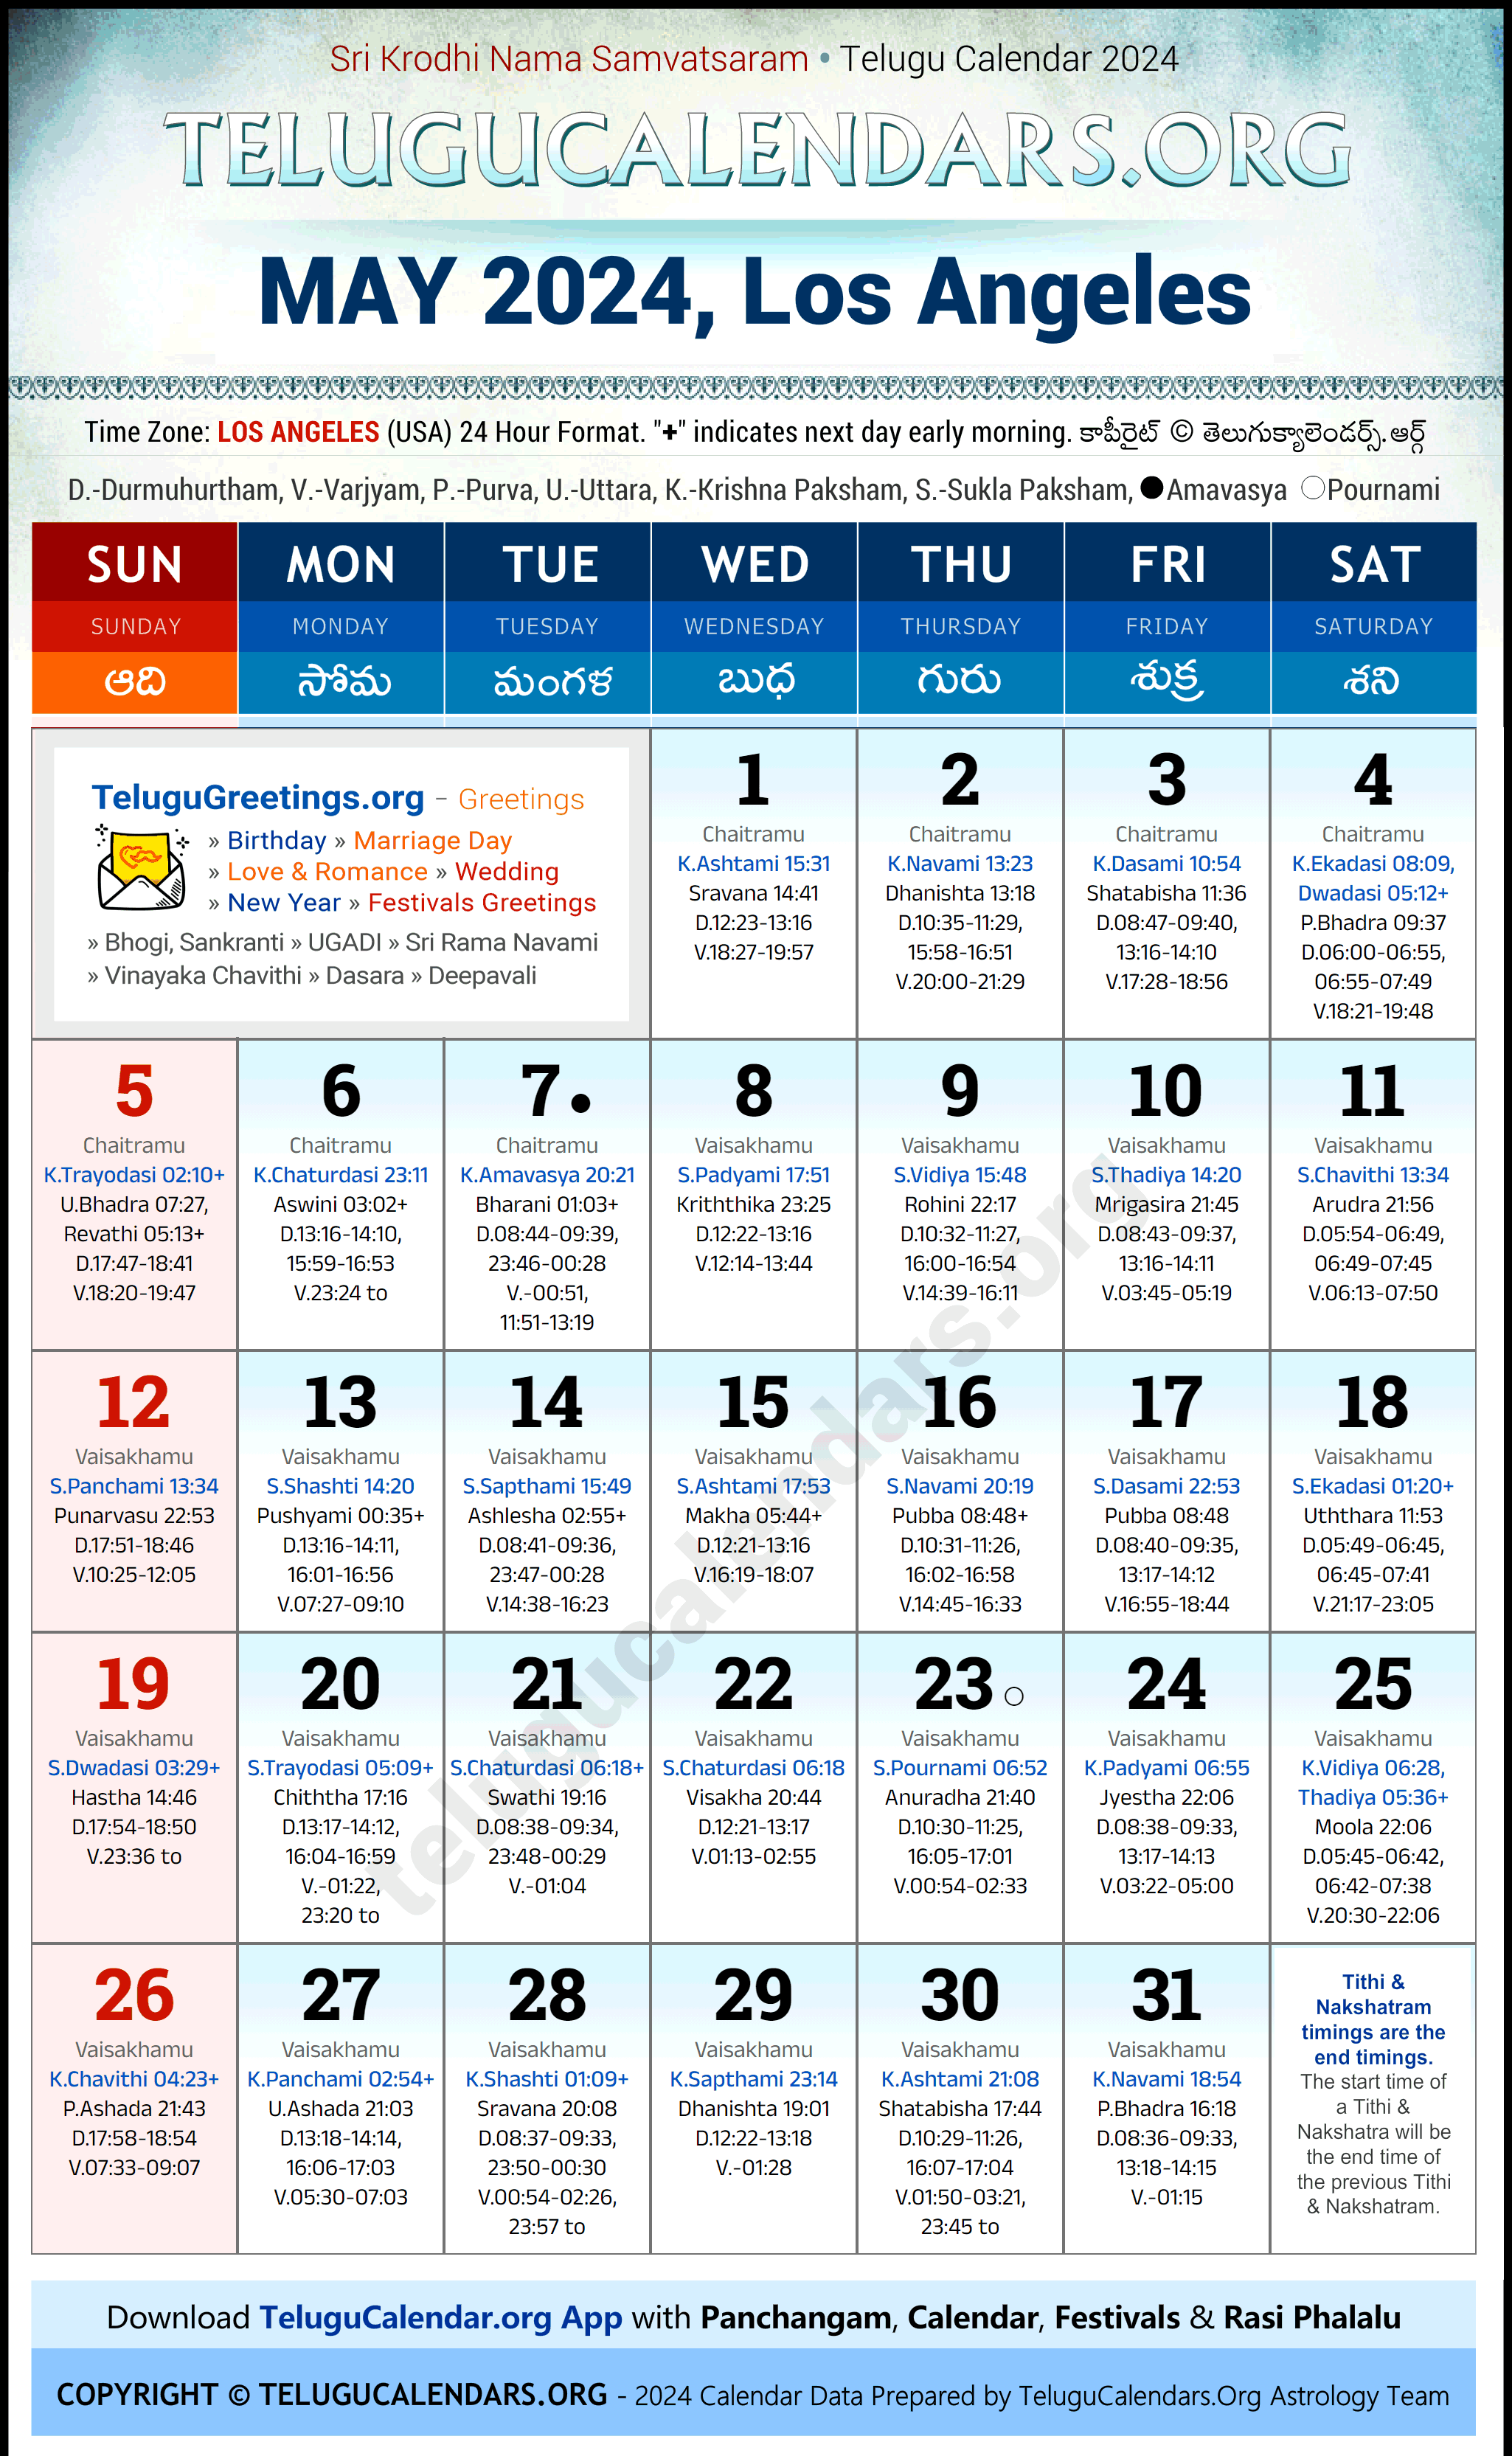 Telugu Calendar 2024 May Festivals for Los Angeles